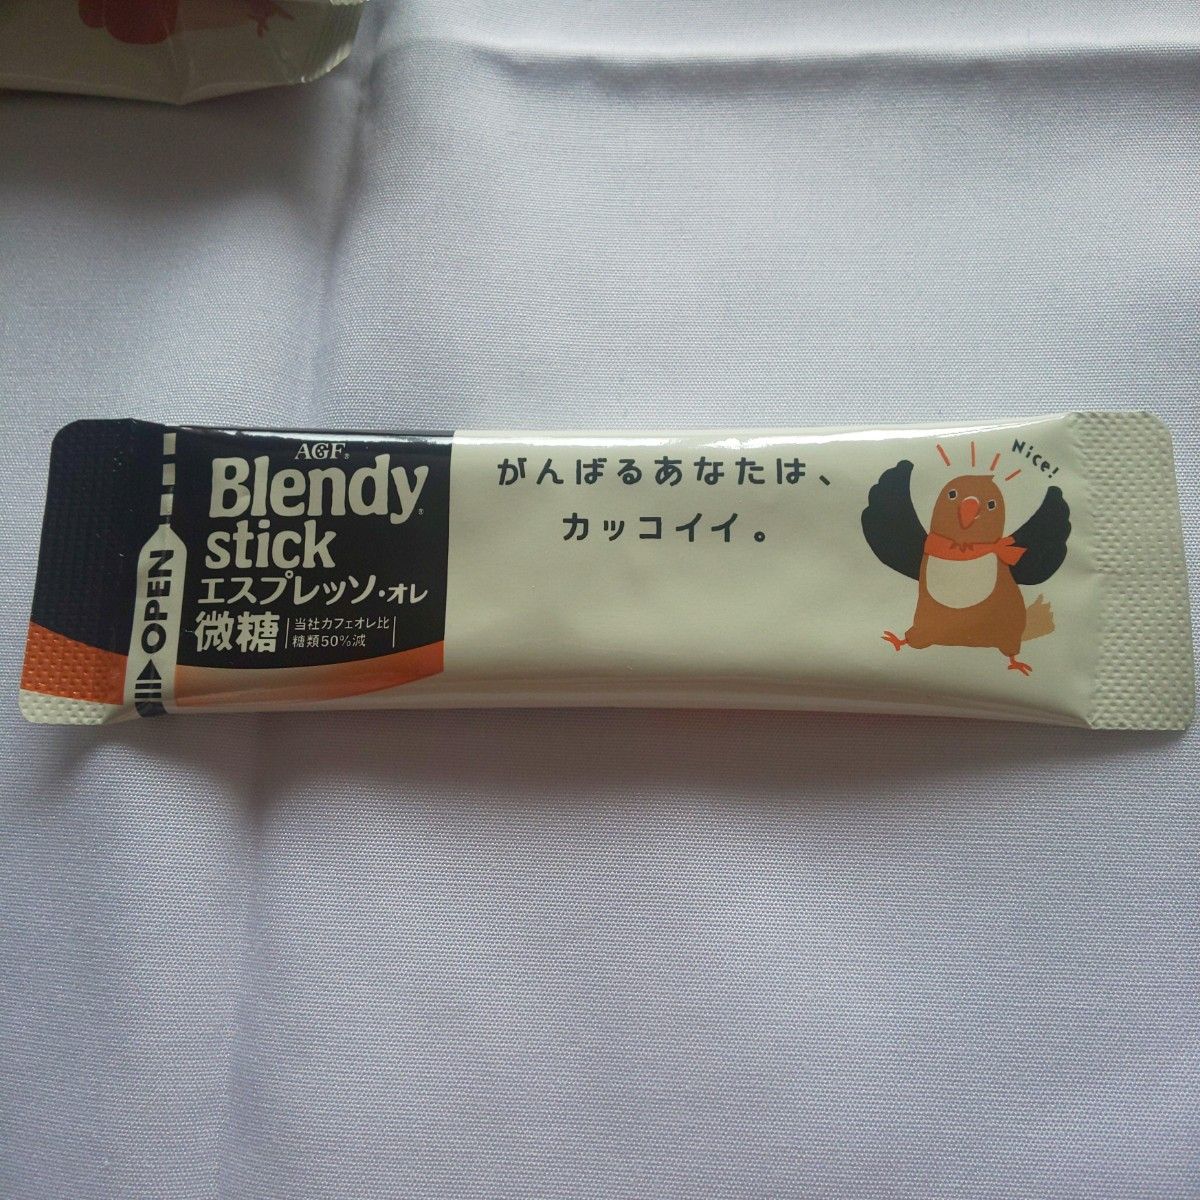 AGF Blendy stick ２種類セット